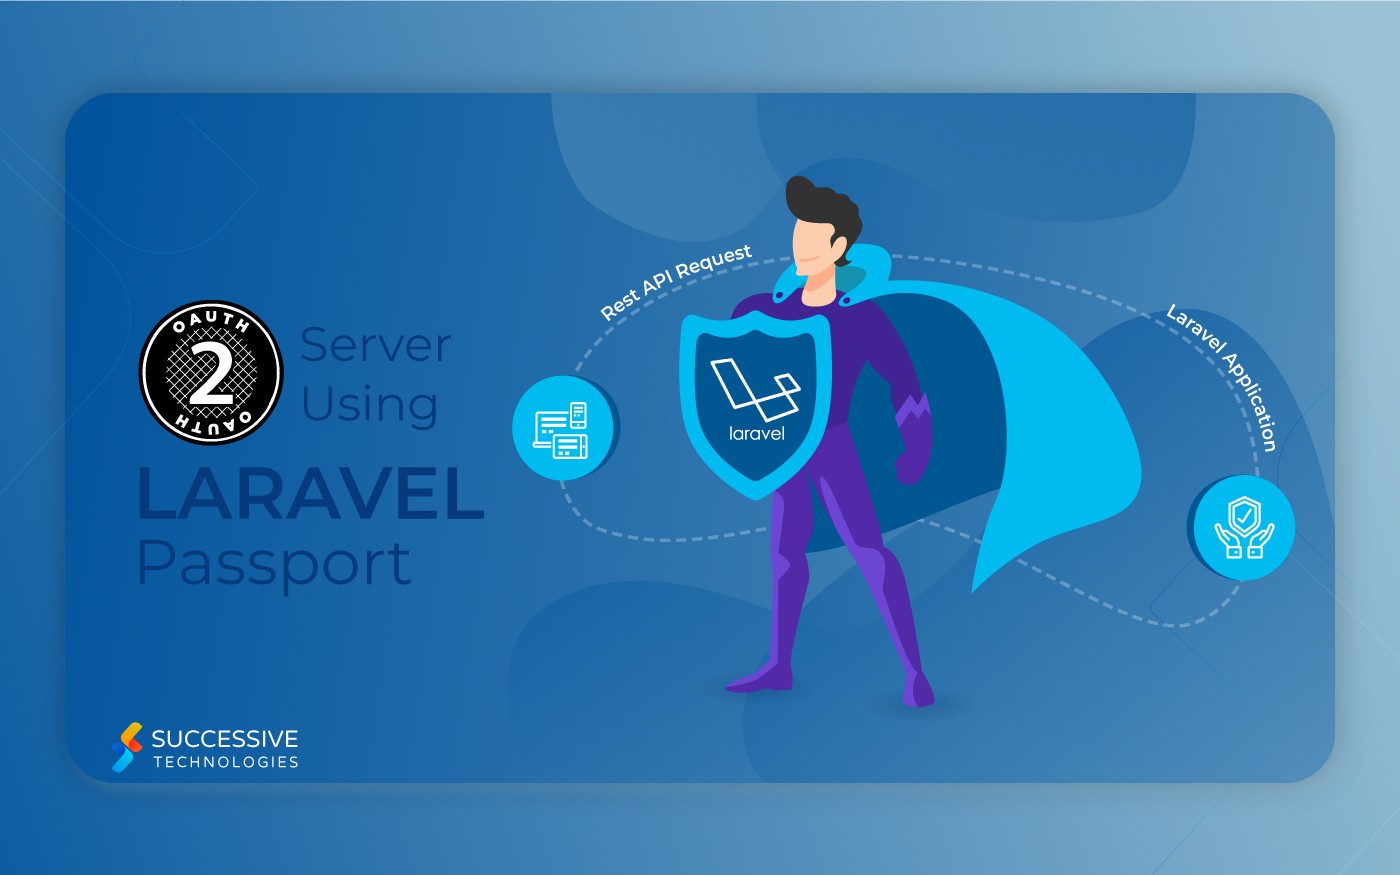 Make an OAuth2 server using Laravel Passport